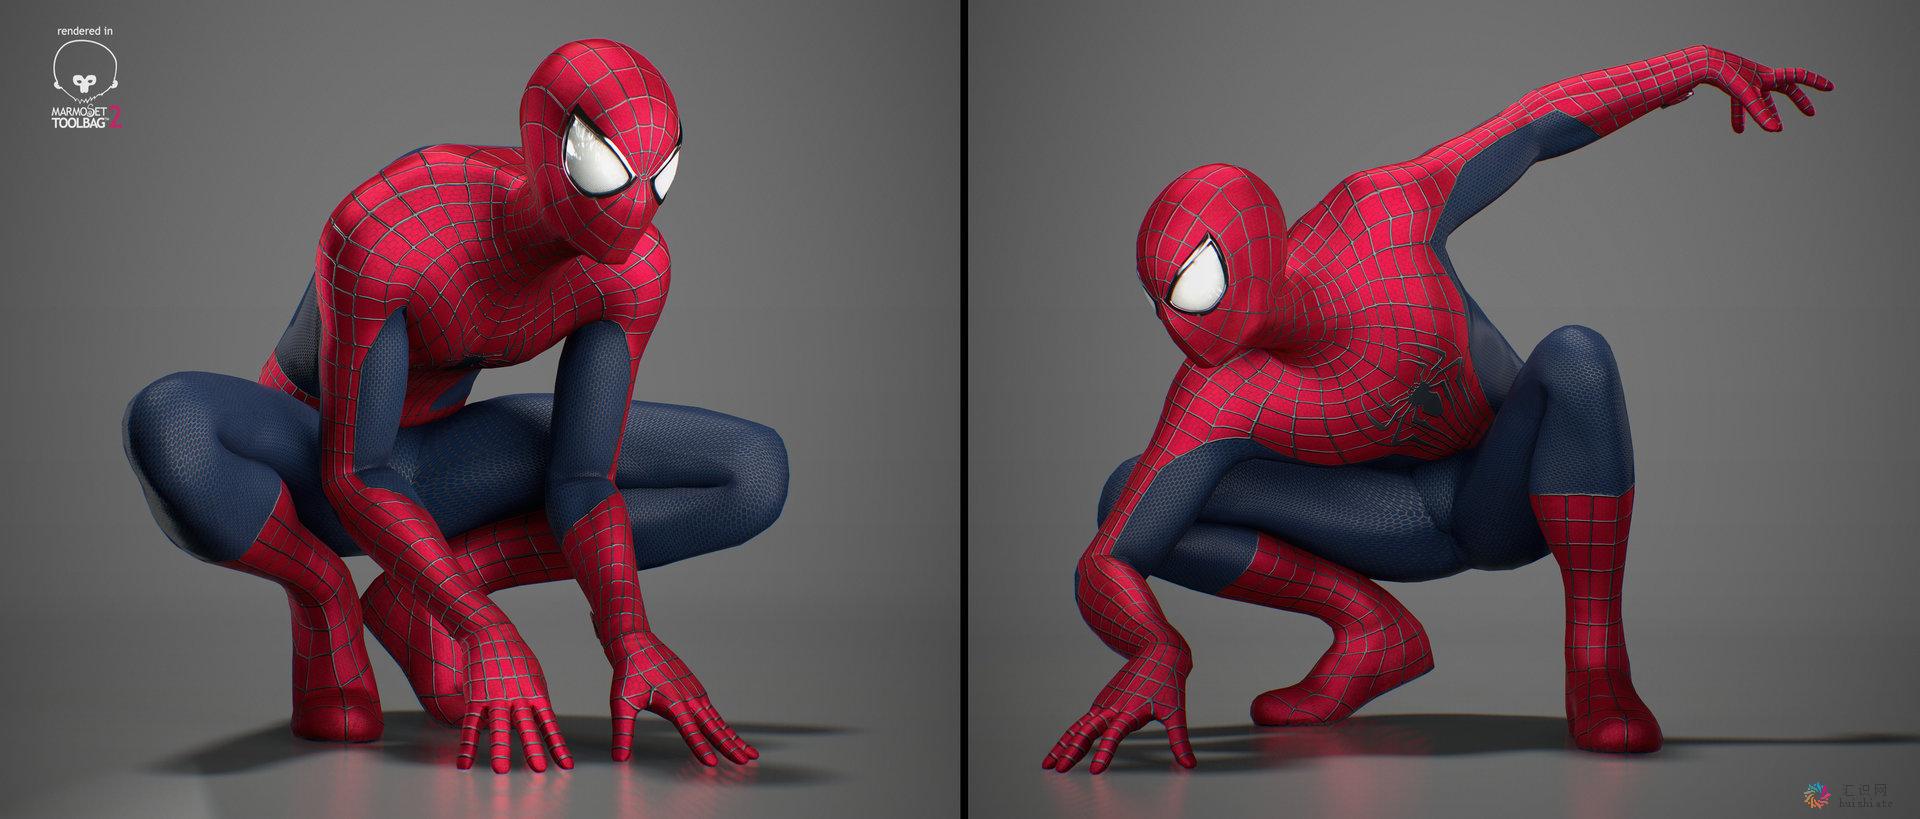 SpidermanMV.jpg